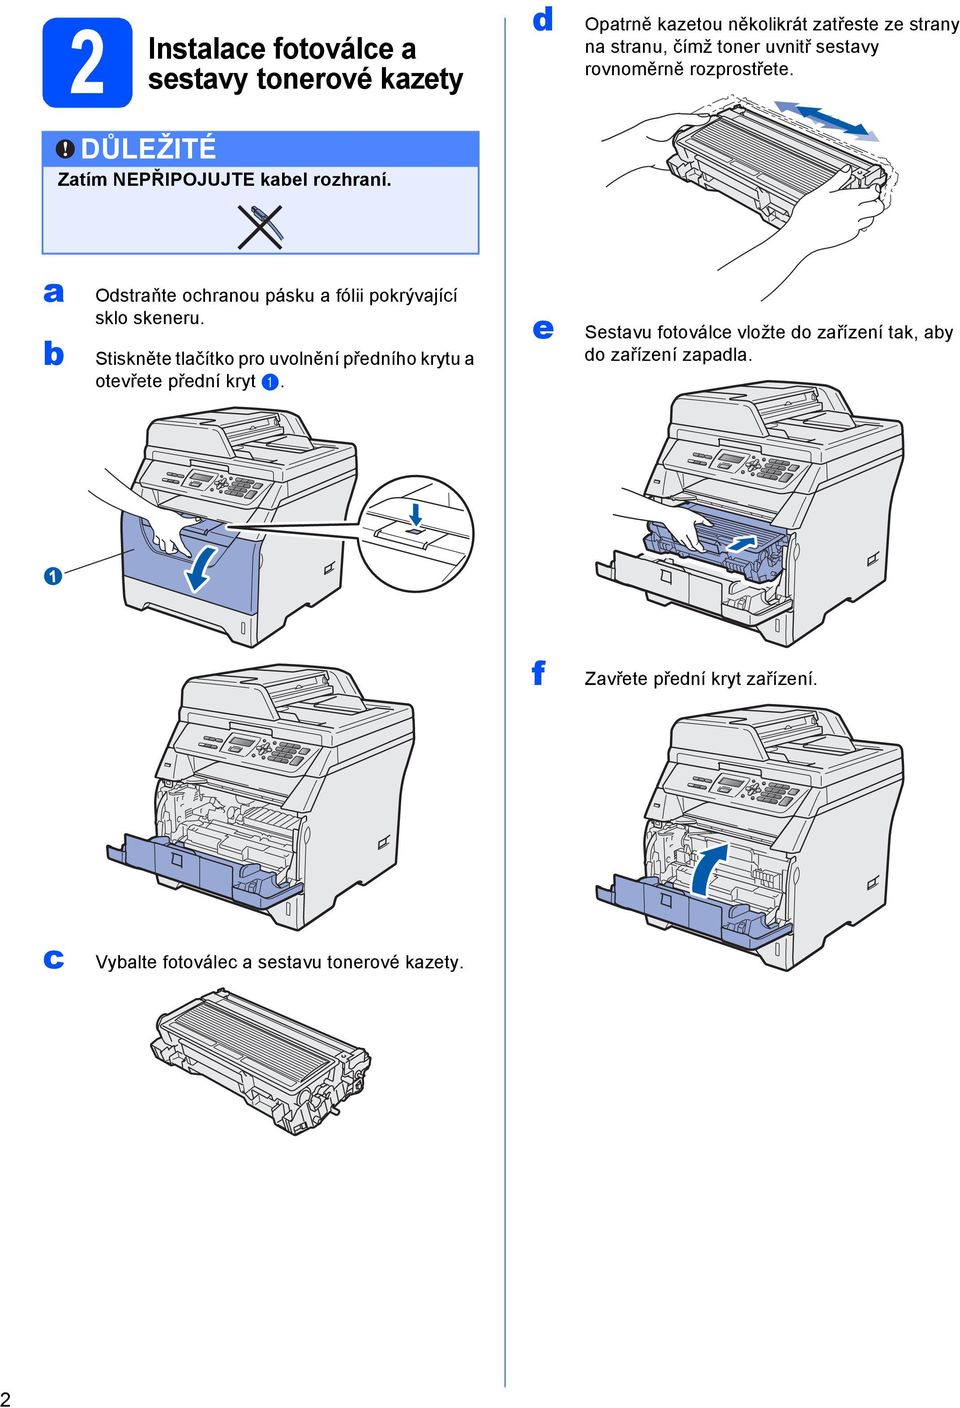 Odstrňte ochrnou pásku fólii pokrývjící sklo skeneru.